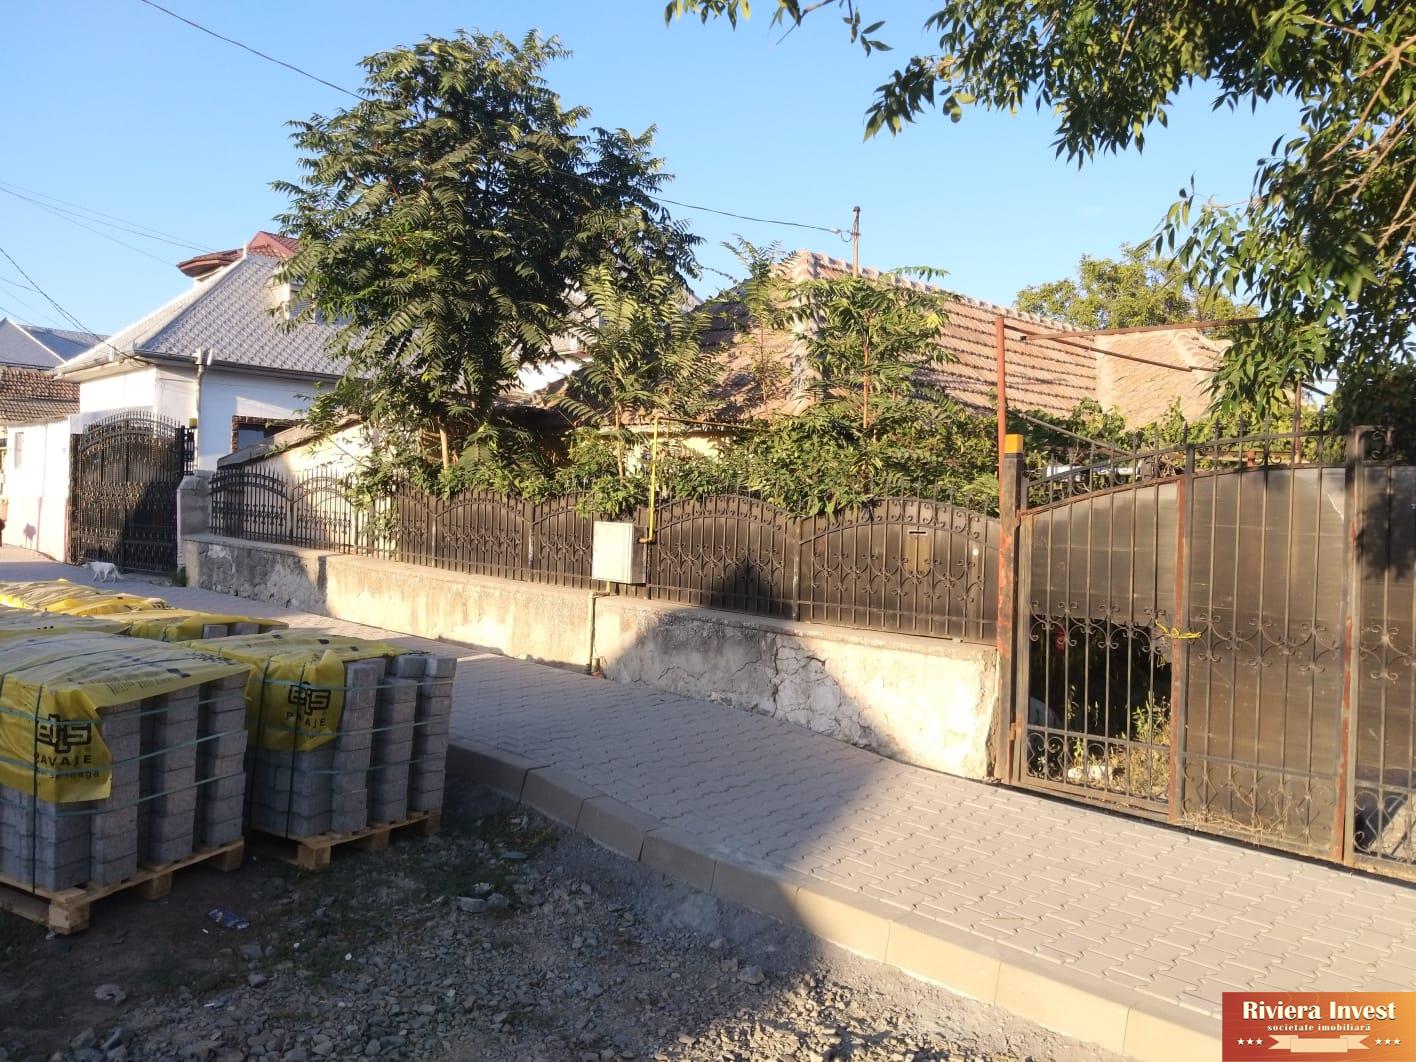 Navodari, strada Plopilor, teren 2352 mp cu casa renovabila/ demolabila